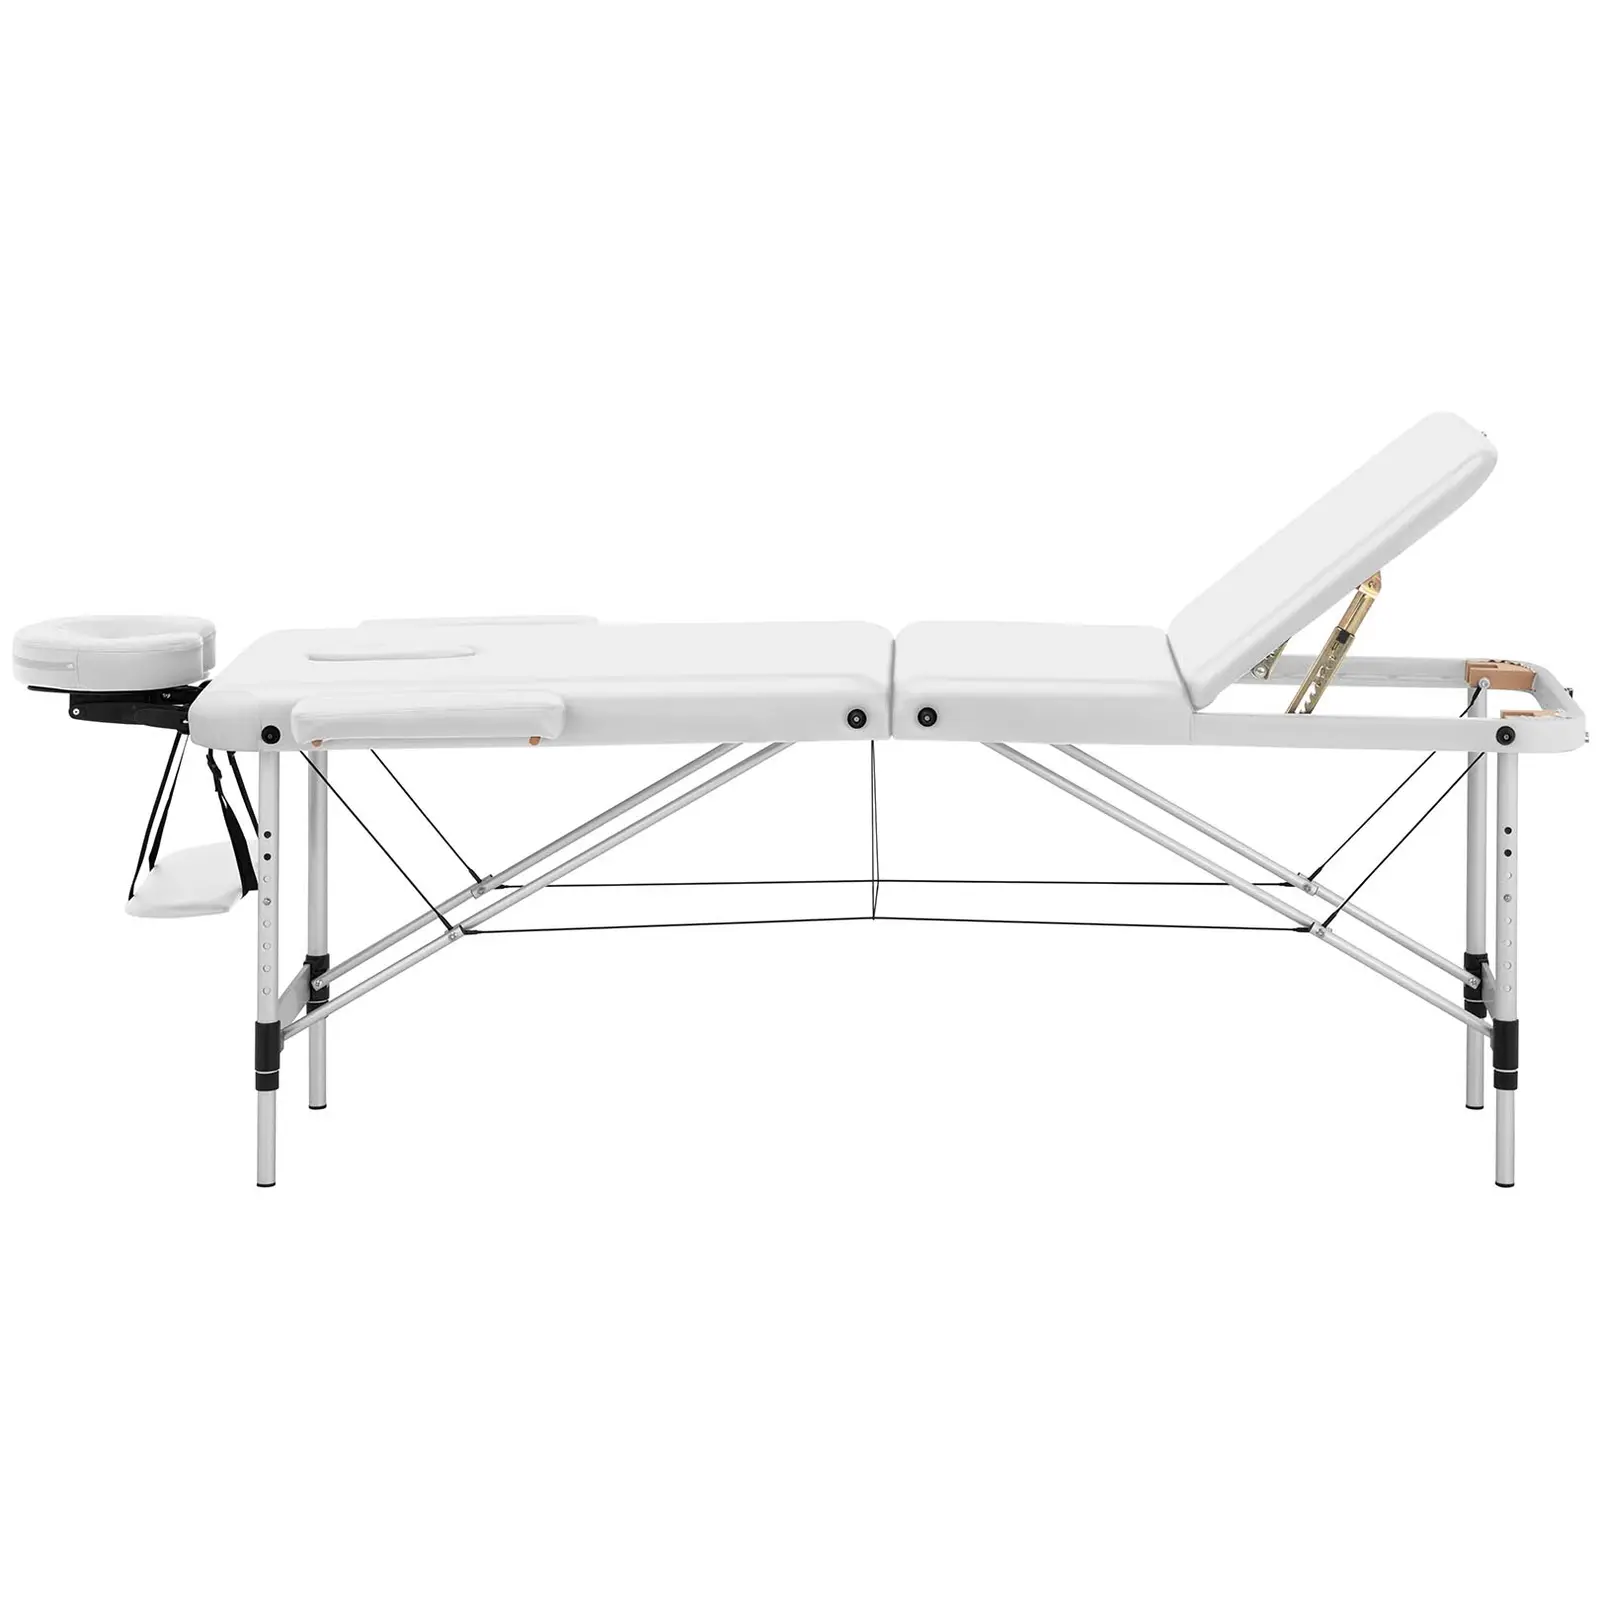 Folding Massage Table - 185 x 60 x 59 cm - 180 kg - White